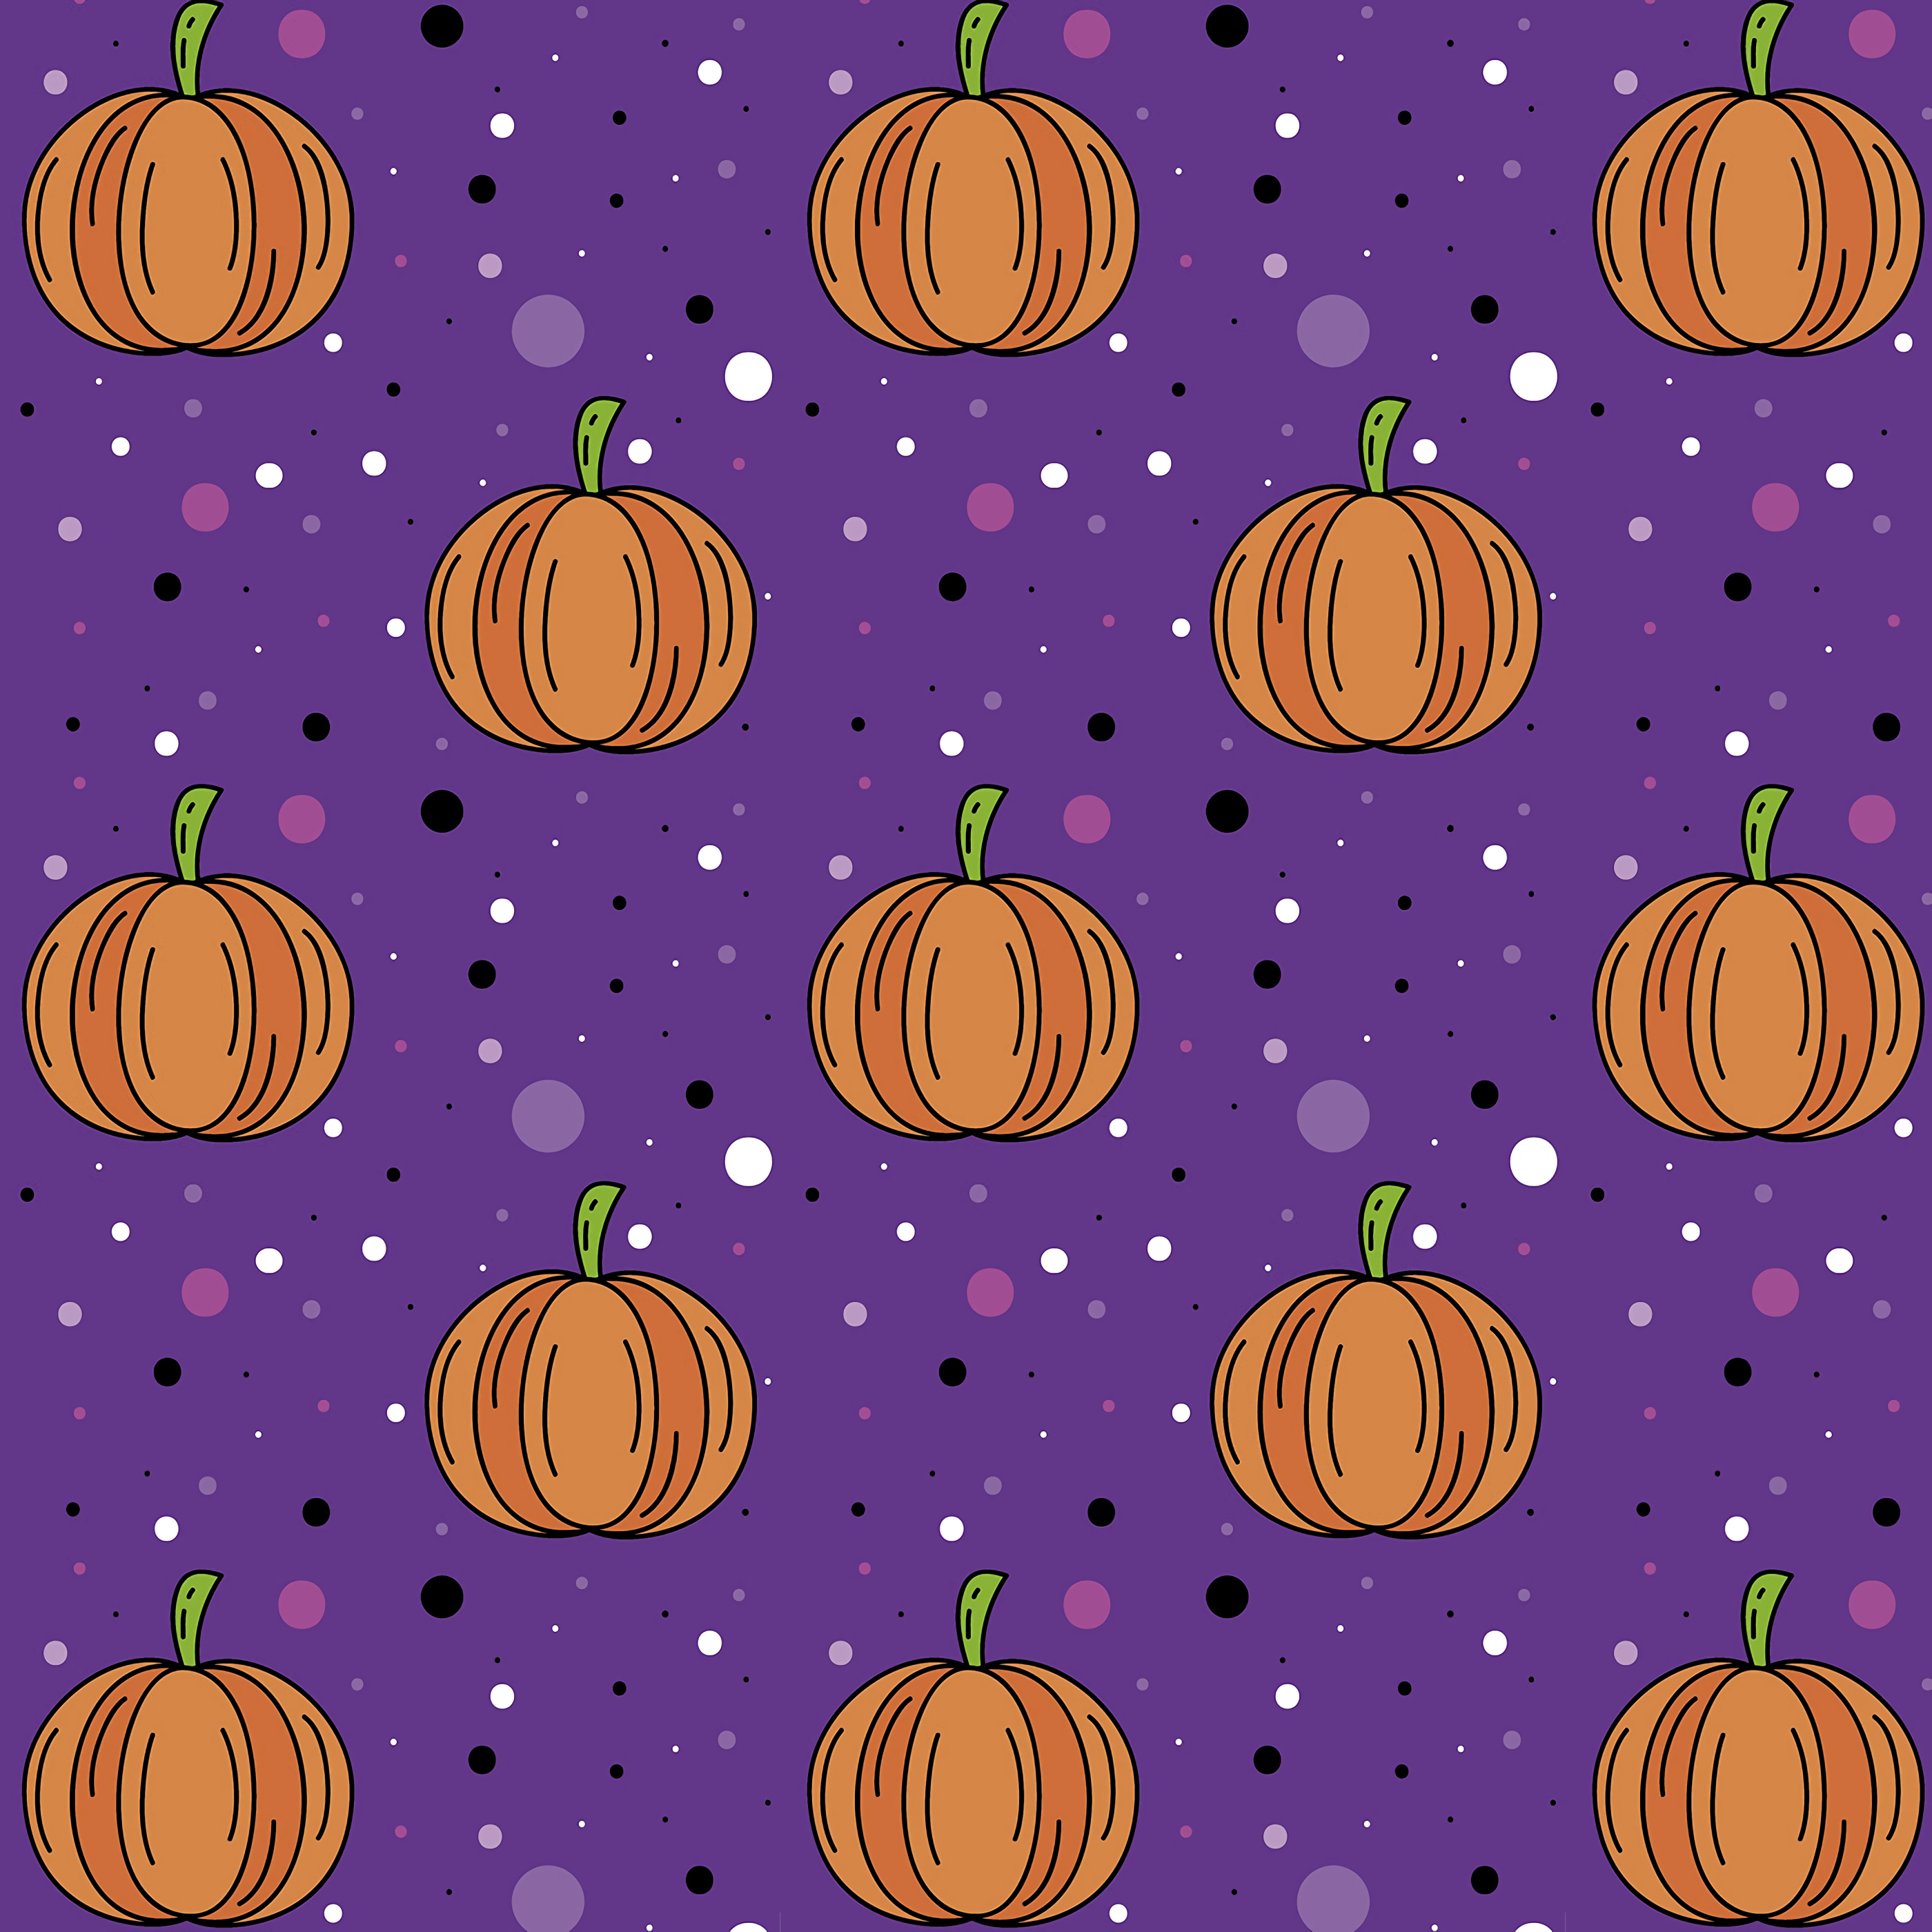 Pumpkin Lock Screen Images